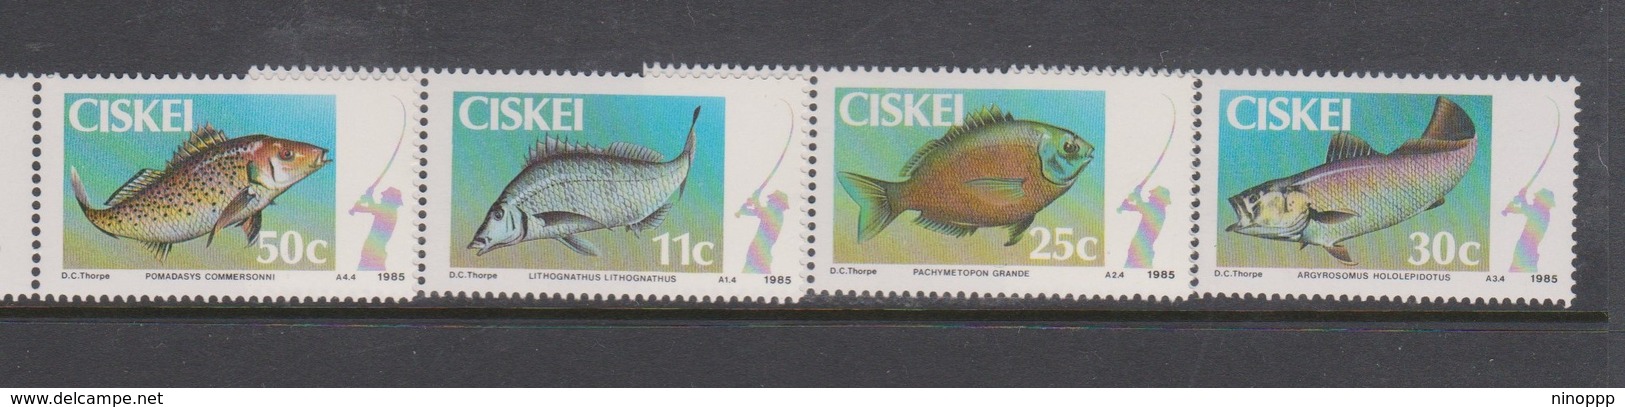 South Africa-Ciskei Scott 69-72 1985 Game Fish, Mint Never Hinged - Ciskei